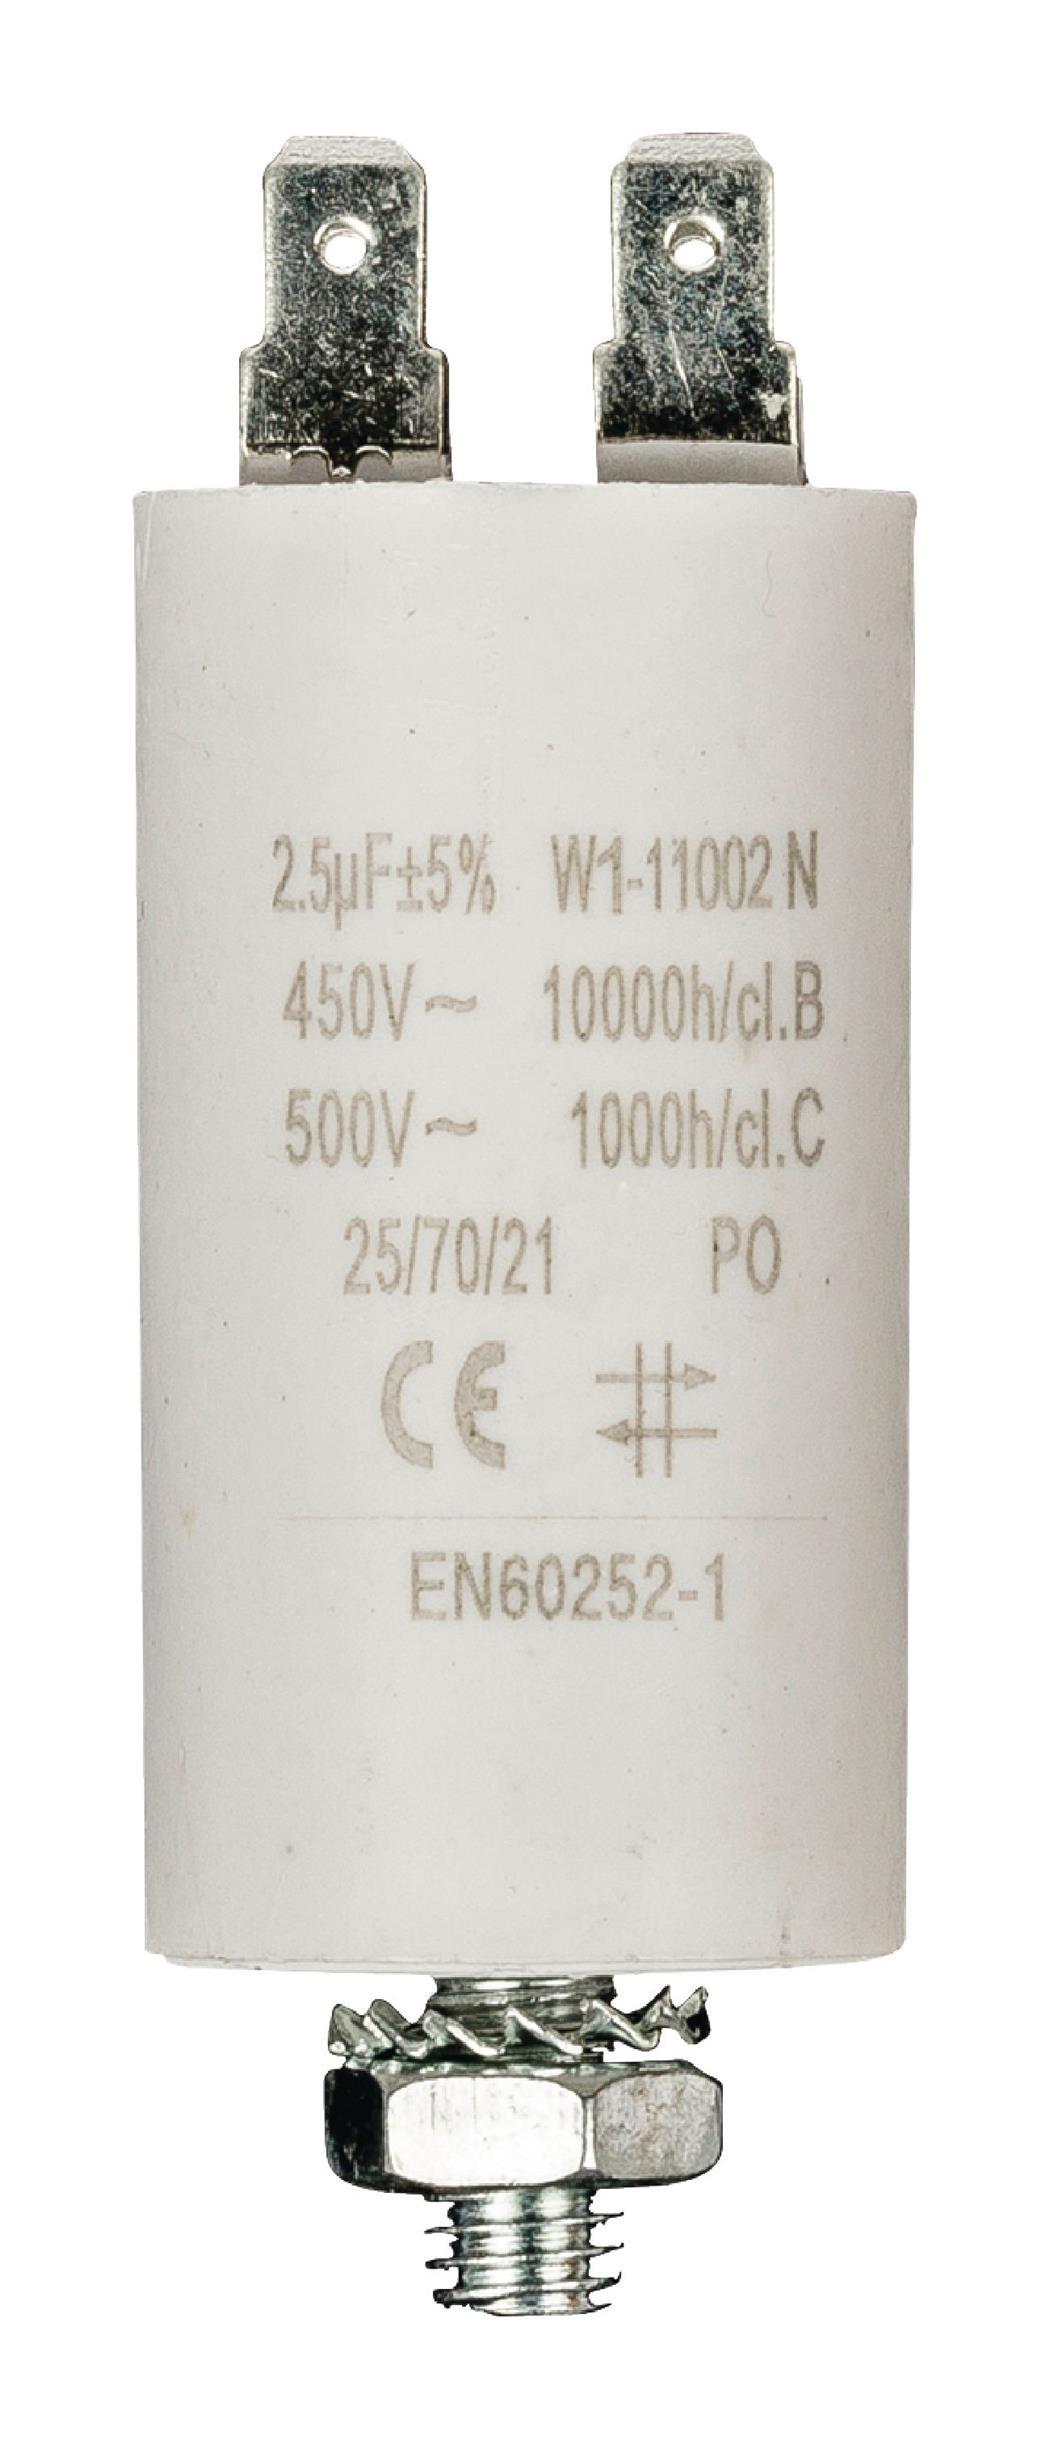 Кондензатор - W1-11002 2.5MF/450V